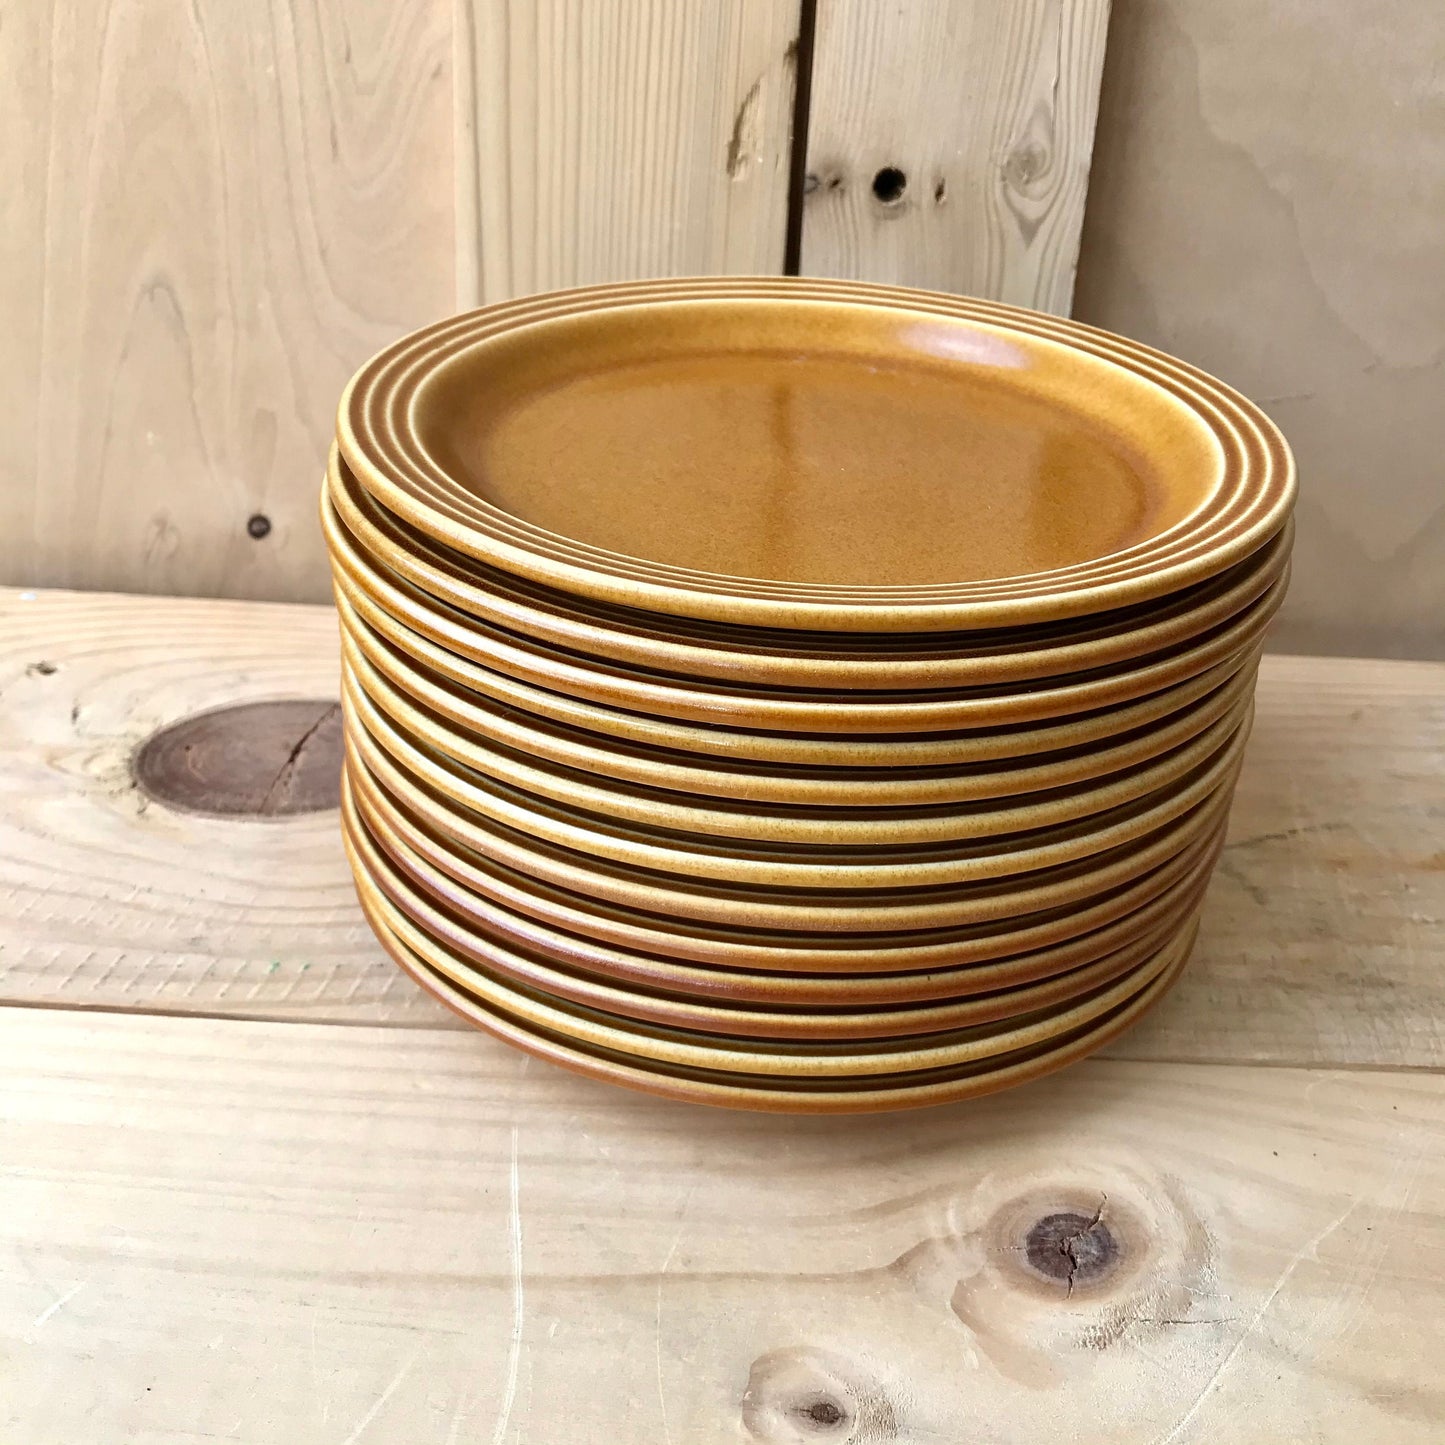 Hornsea pottery plate